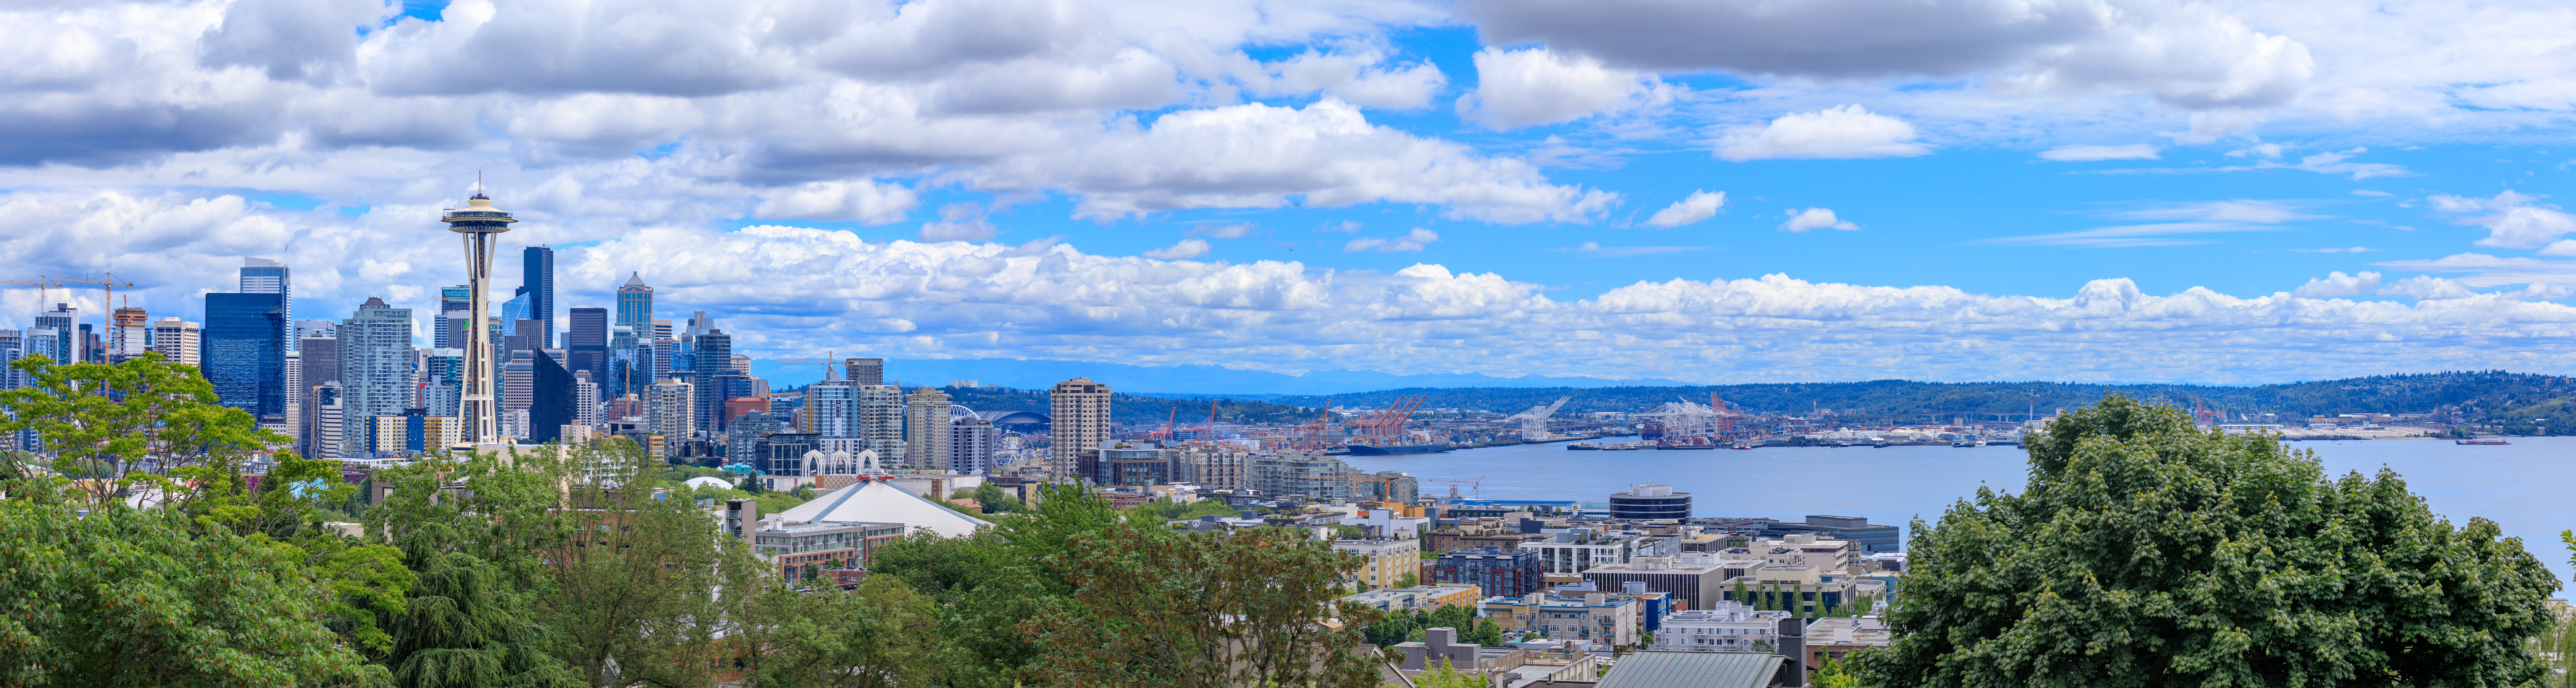 Panorama del horizonte de Seattle